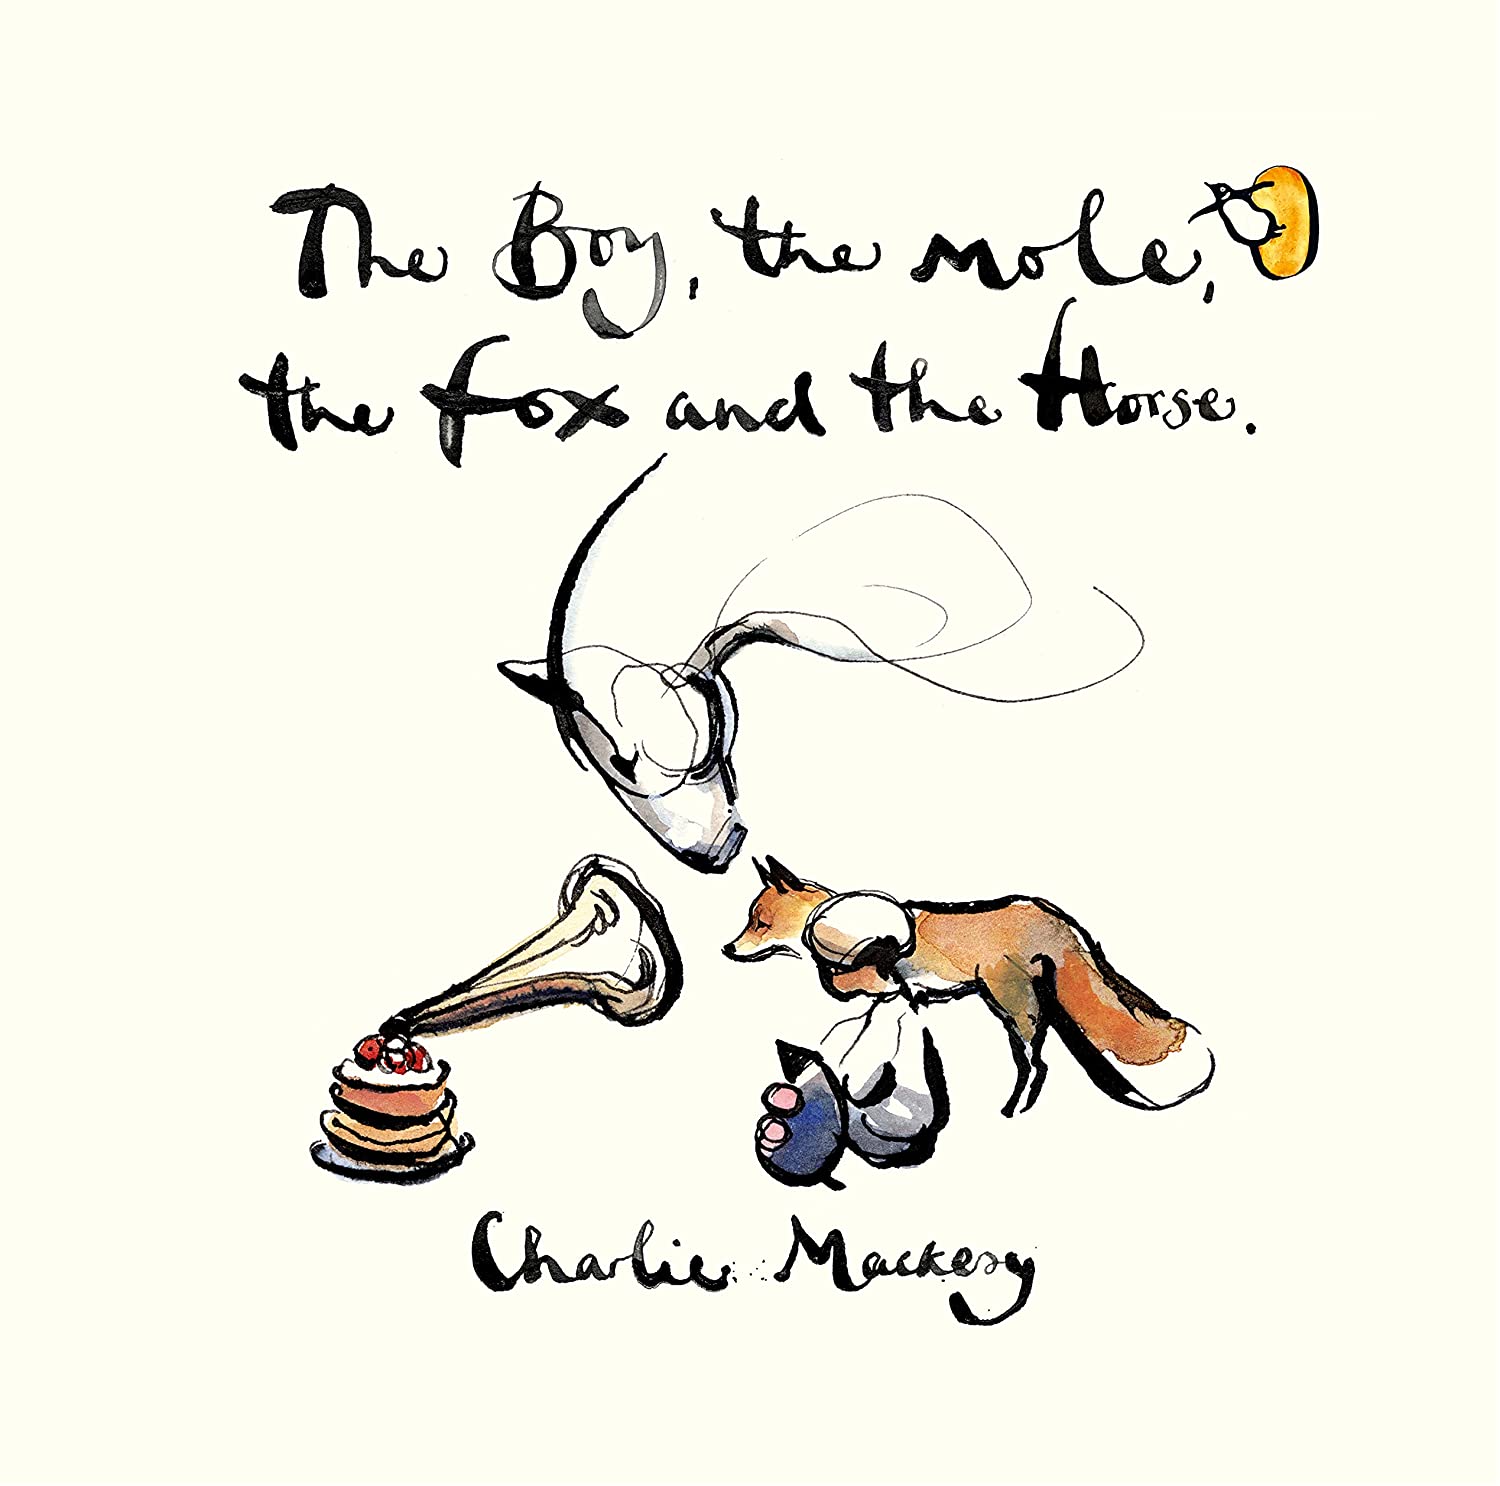 The fox and the mole. The boy the Mole the Fox and the Horse. The boy, the Mole, the Fox and the Horse Charlie Mackesy. The boy the Mole the Fox and the Horse книга. Мальчик, Крот, Лис и лошадь Чарли маккизи книга.